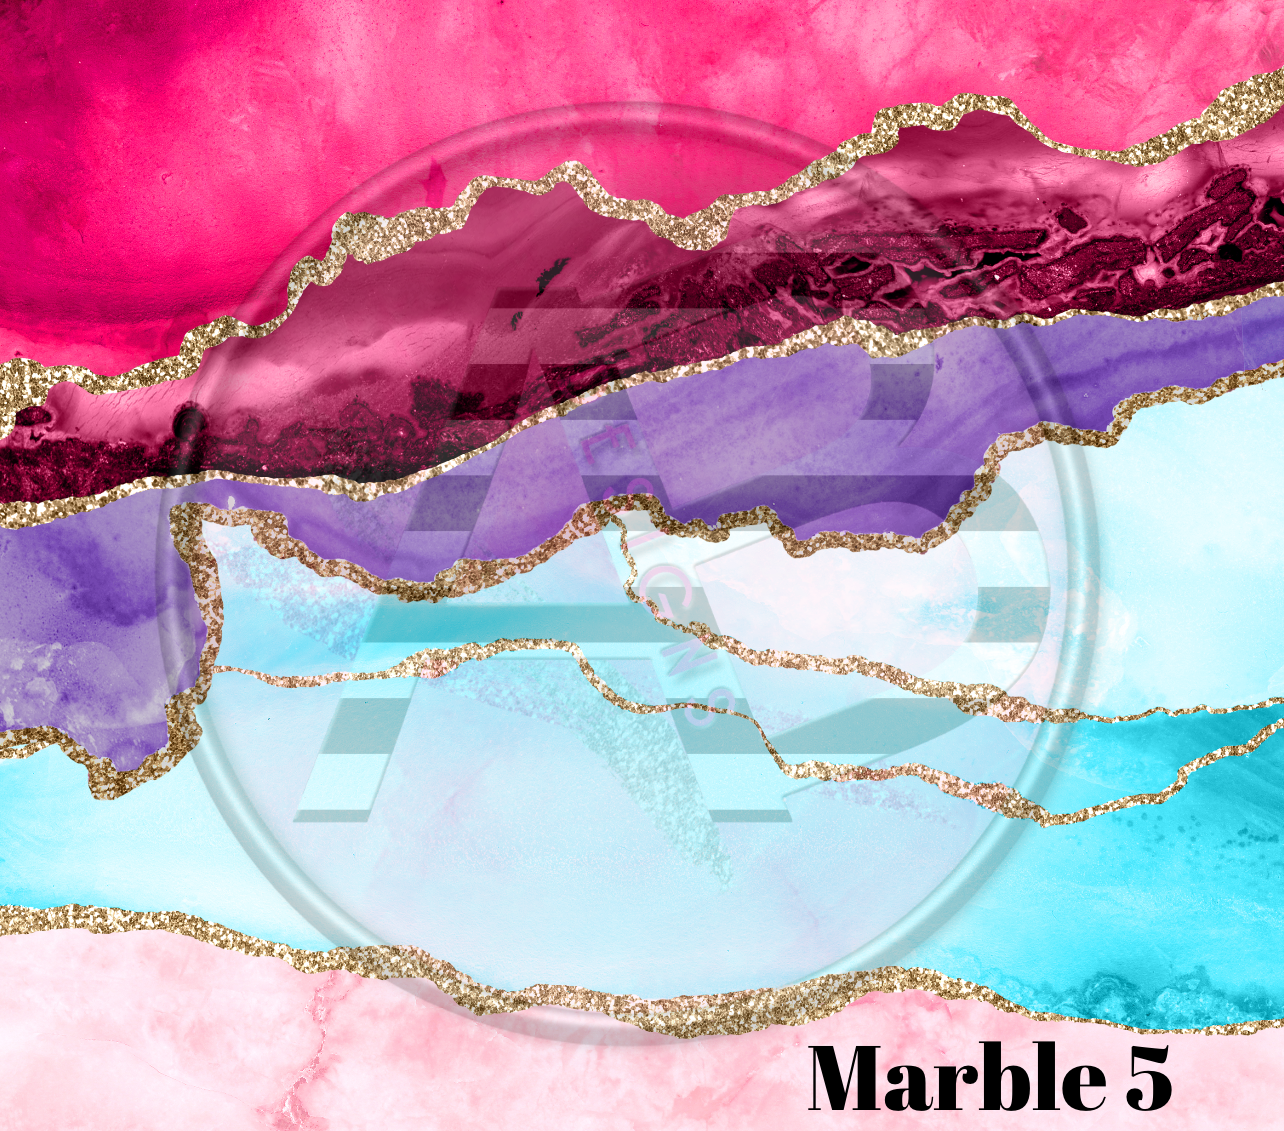 Adhesive Patterned Vinyl - Marble 5